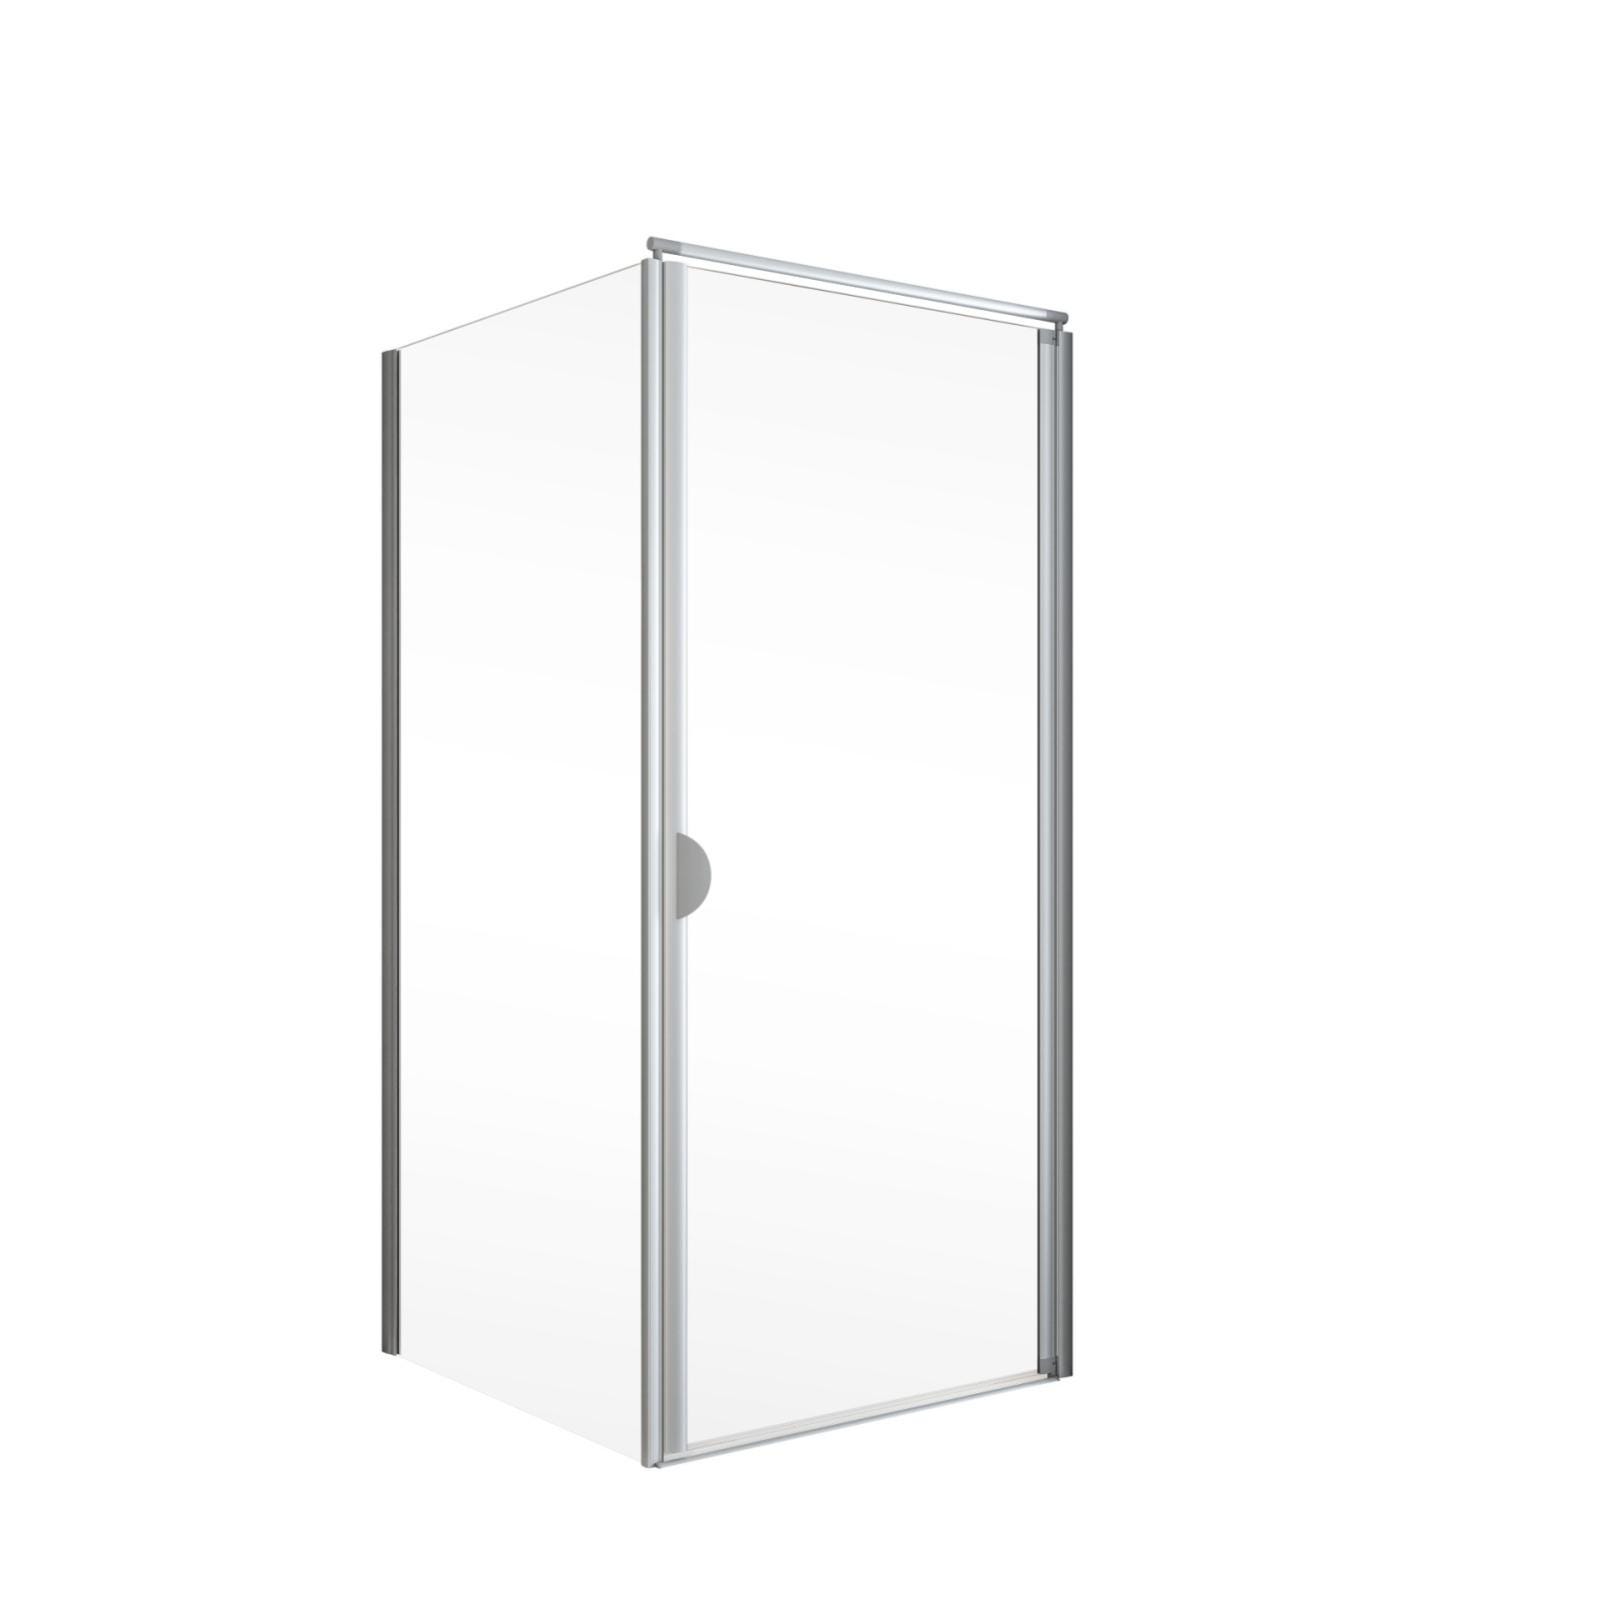 Schulte porte de douche pivotante + paroi de retour fixe, 80 x 80 x 180 cm, verre 5 mm transparent, profilé alu-nature, Sunny 2